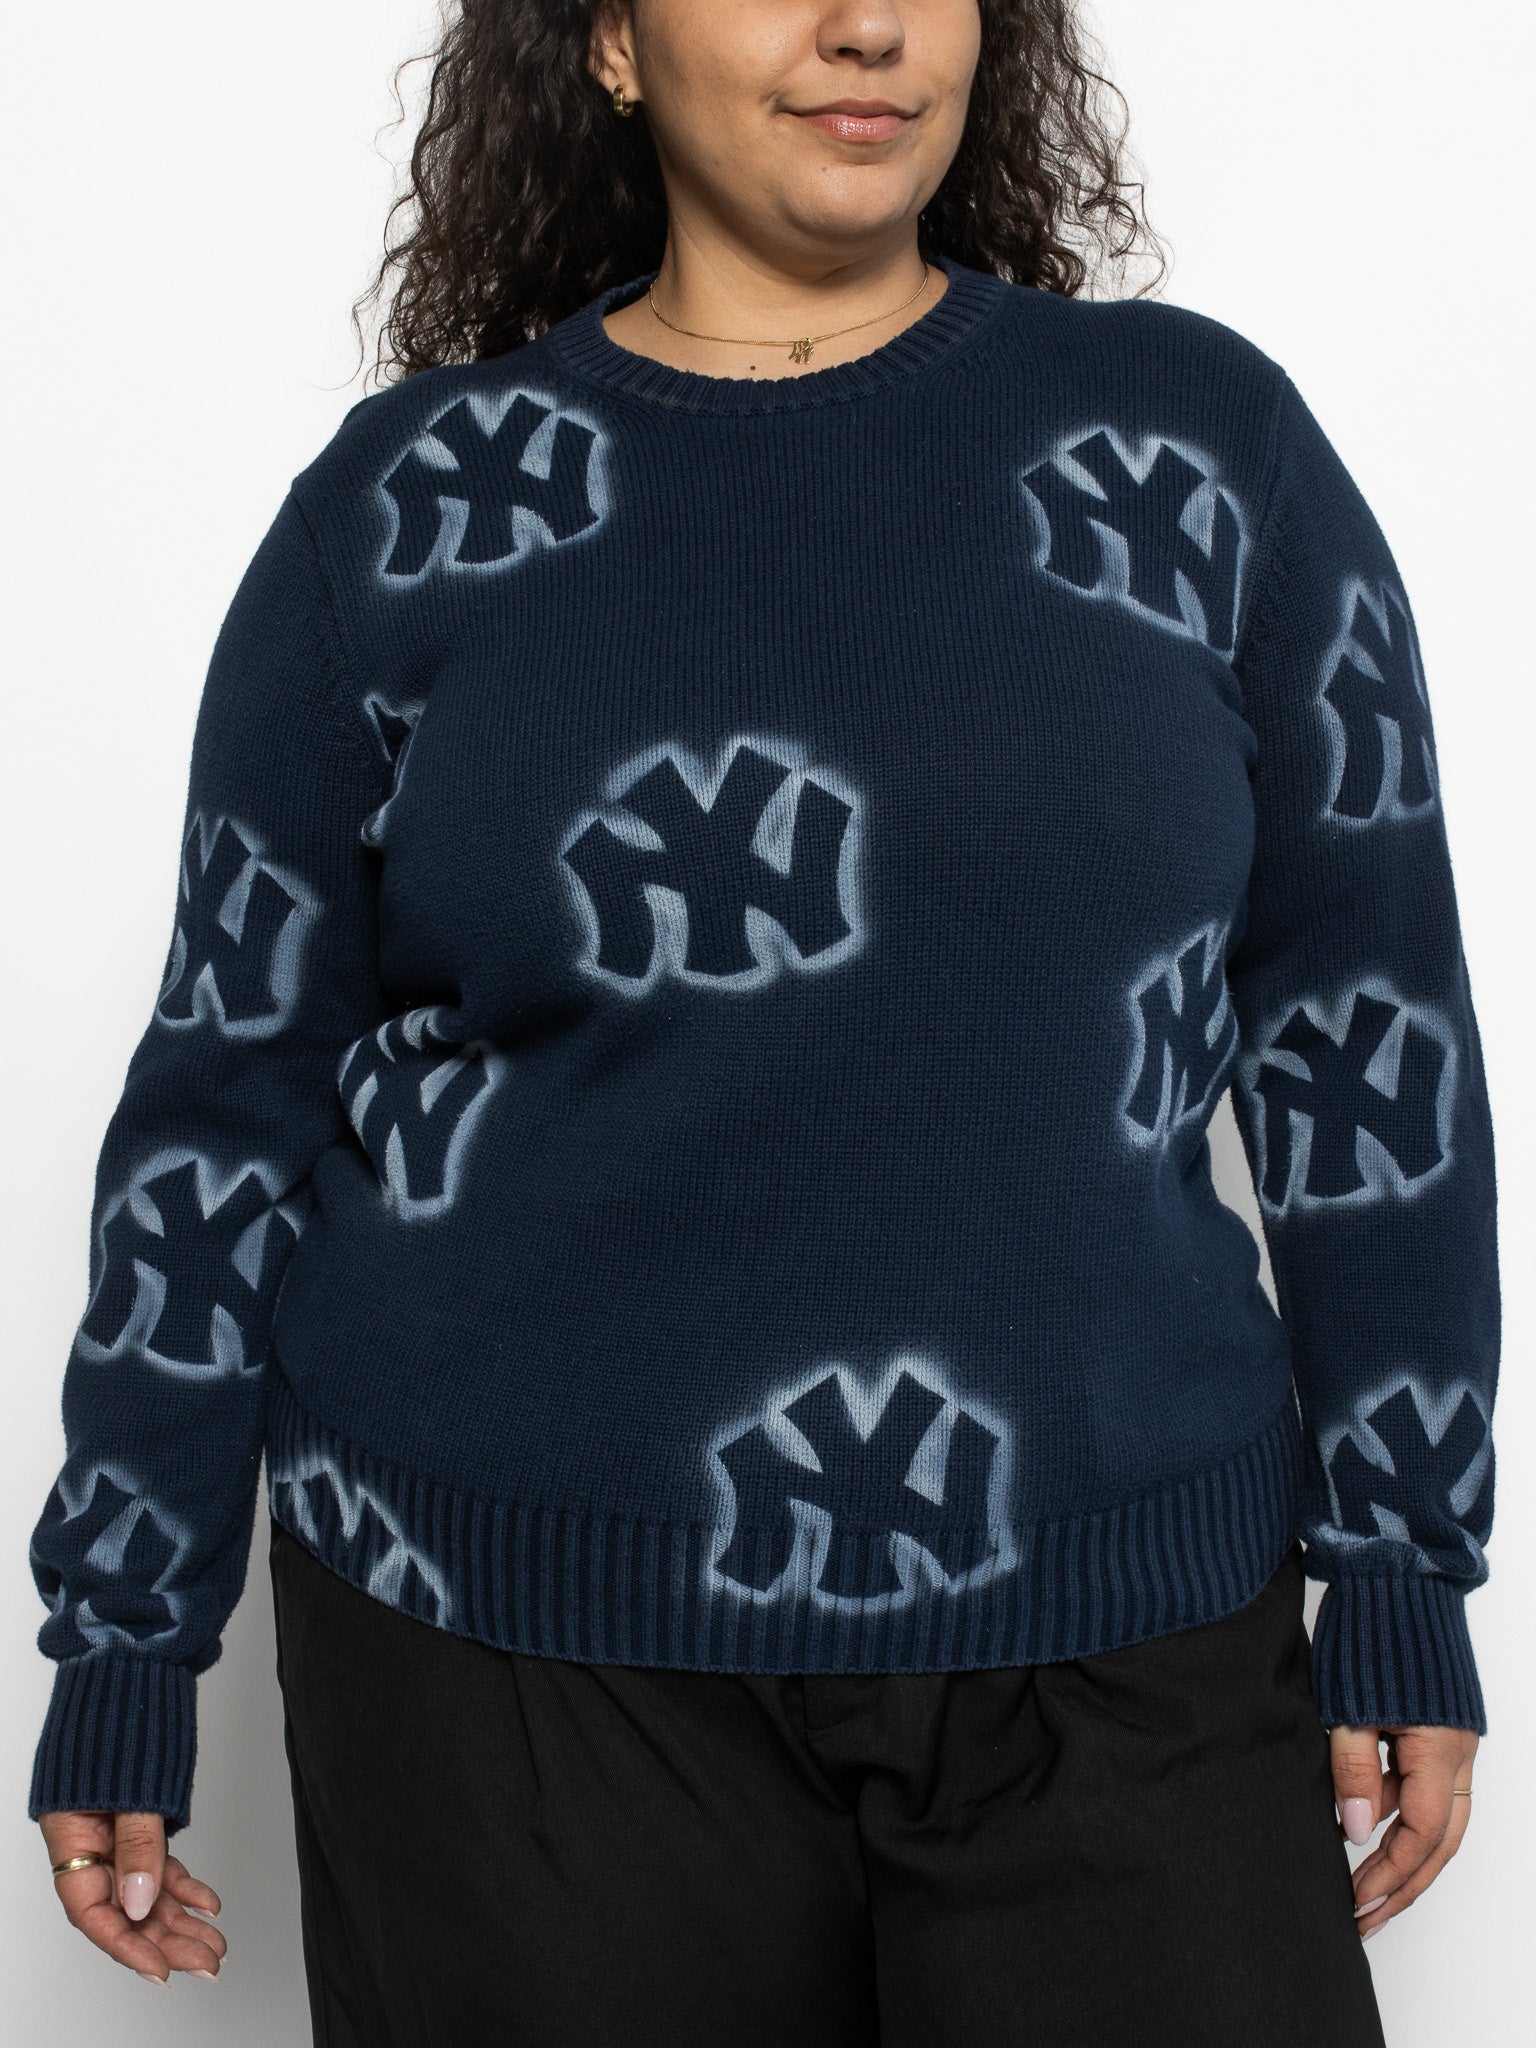 Femlord x BRZ - Navy NY Sweater (XL)